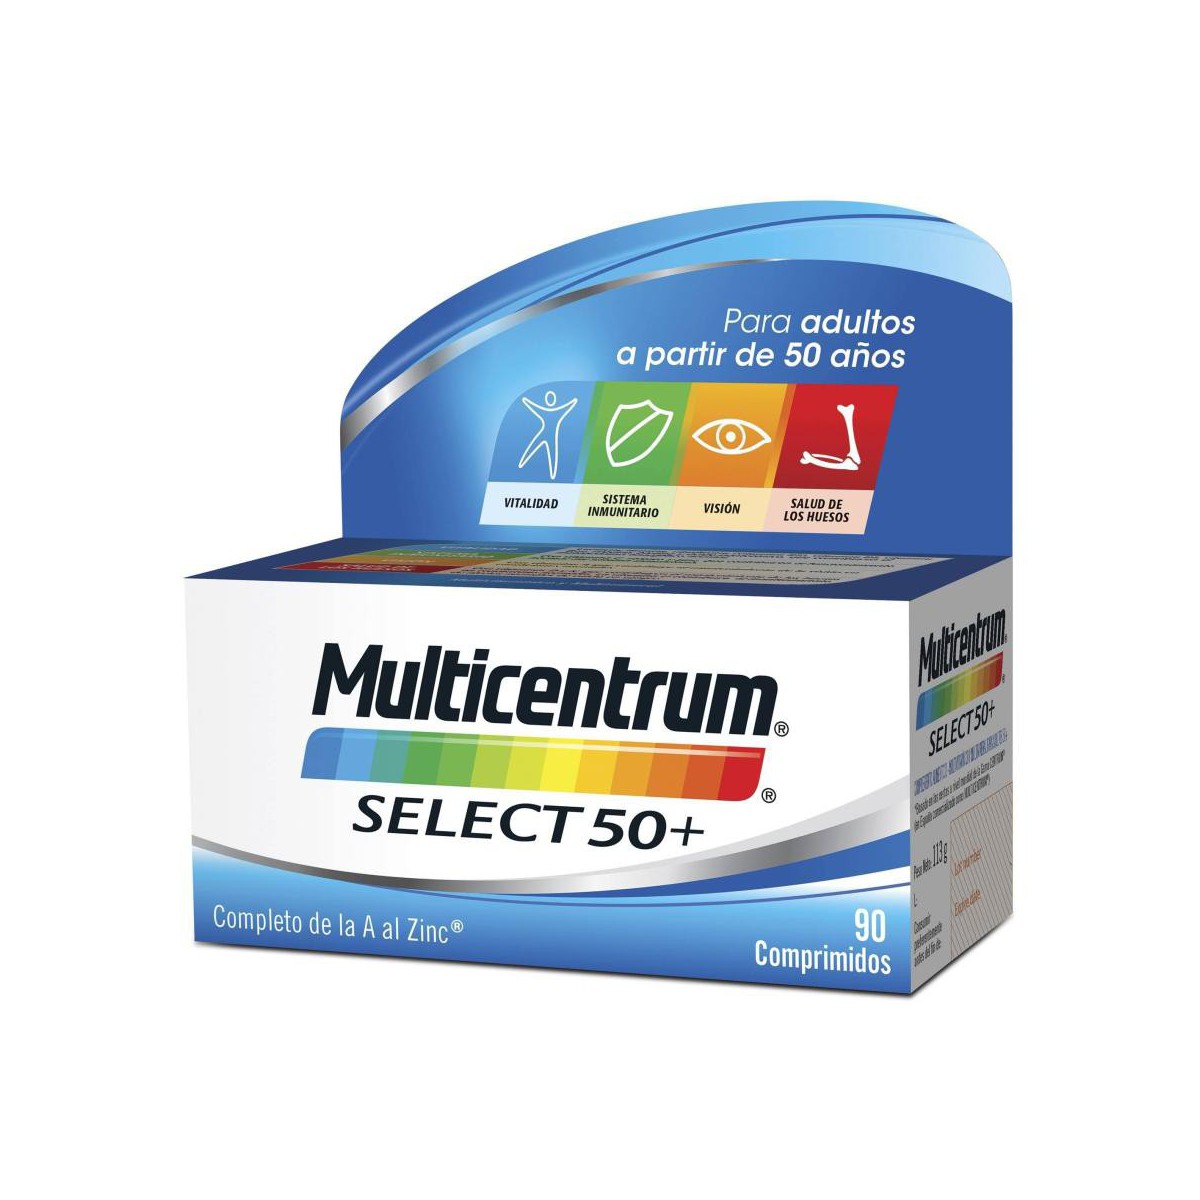 multicentrum 90 comprimidos select 50